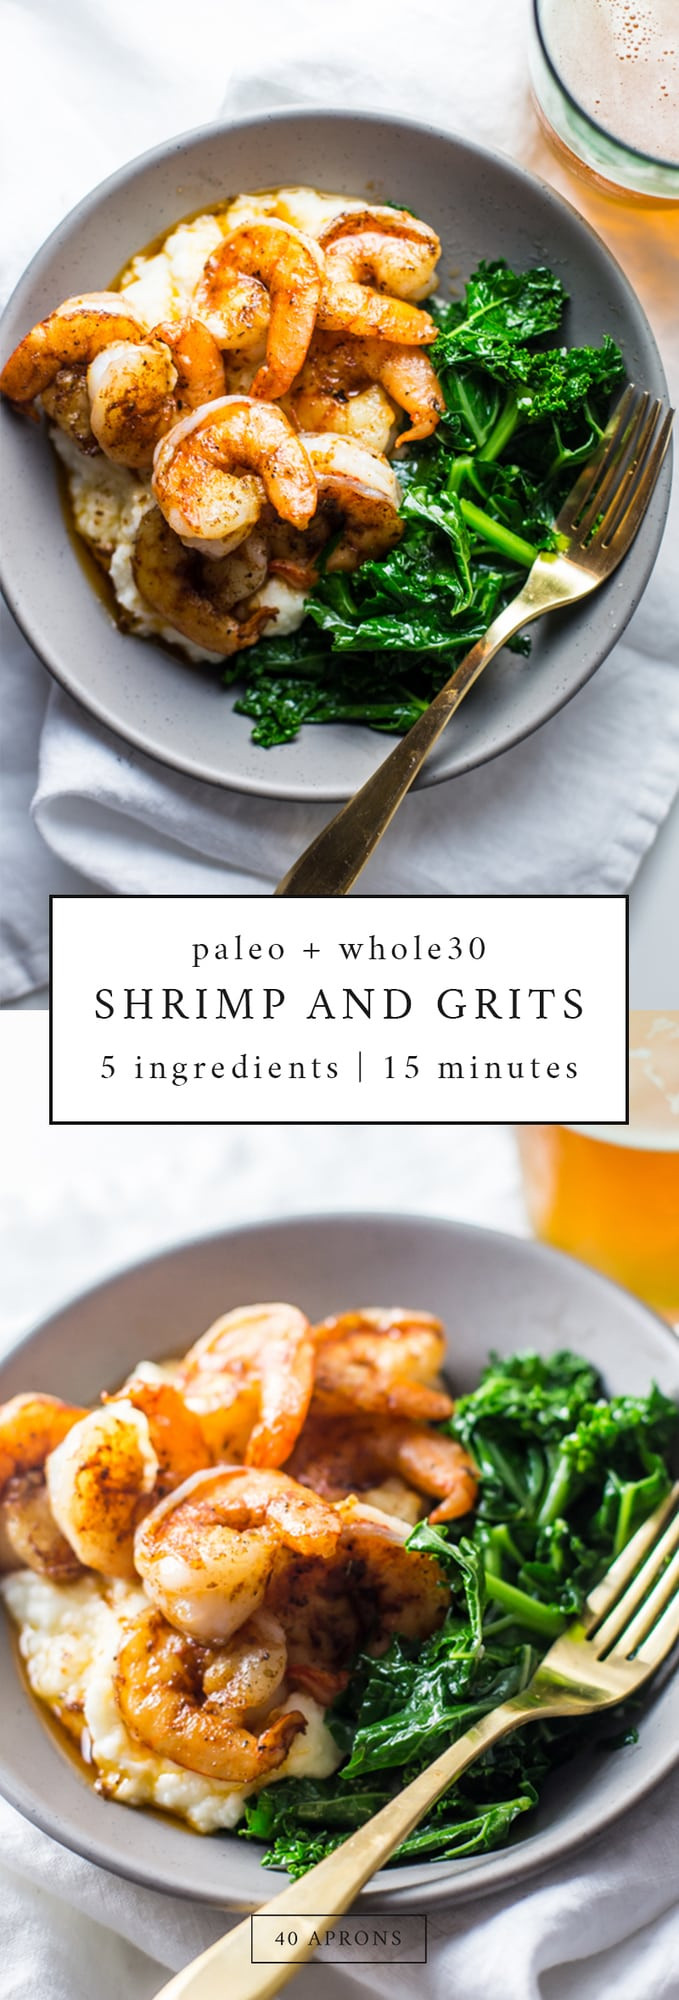 Whole30 Shrimp Recipes
 Paleo Shrimp and Grits Recipe Whole30